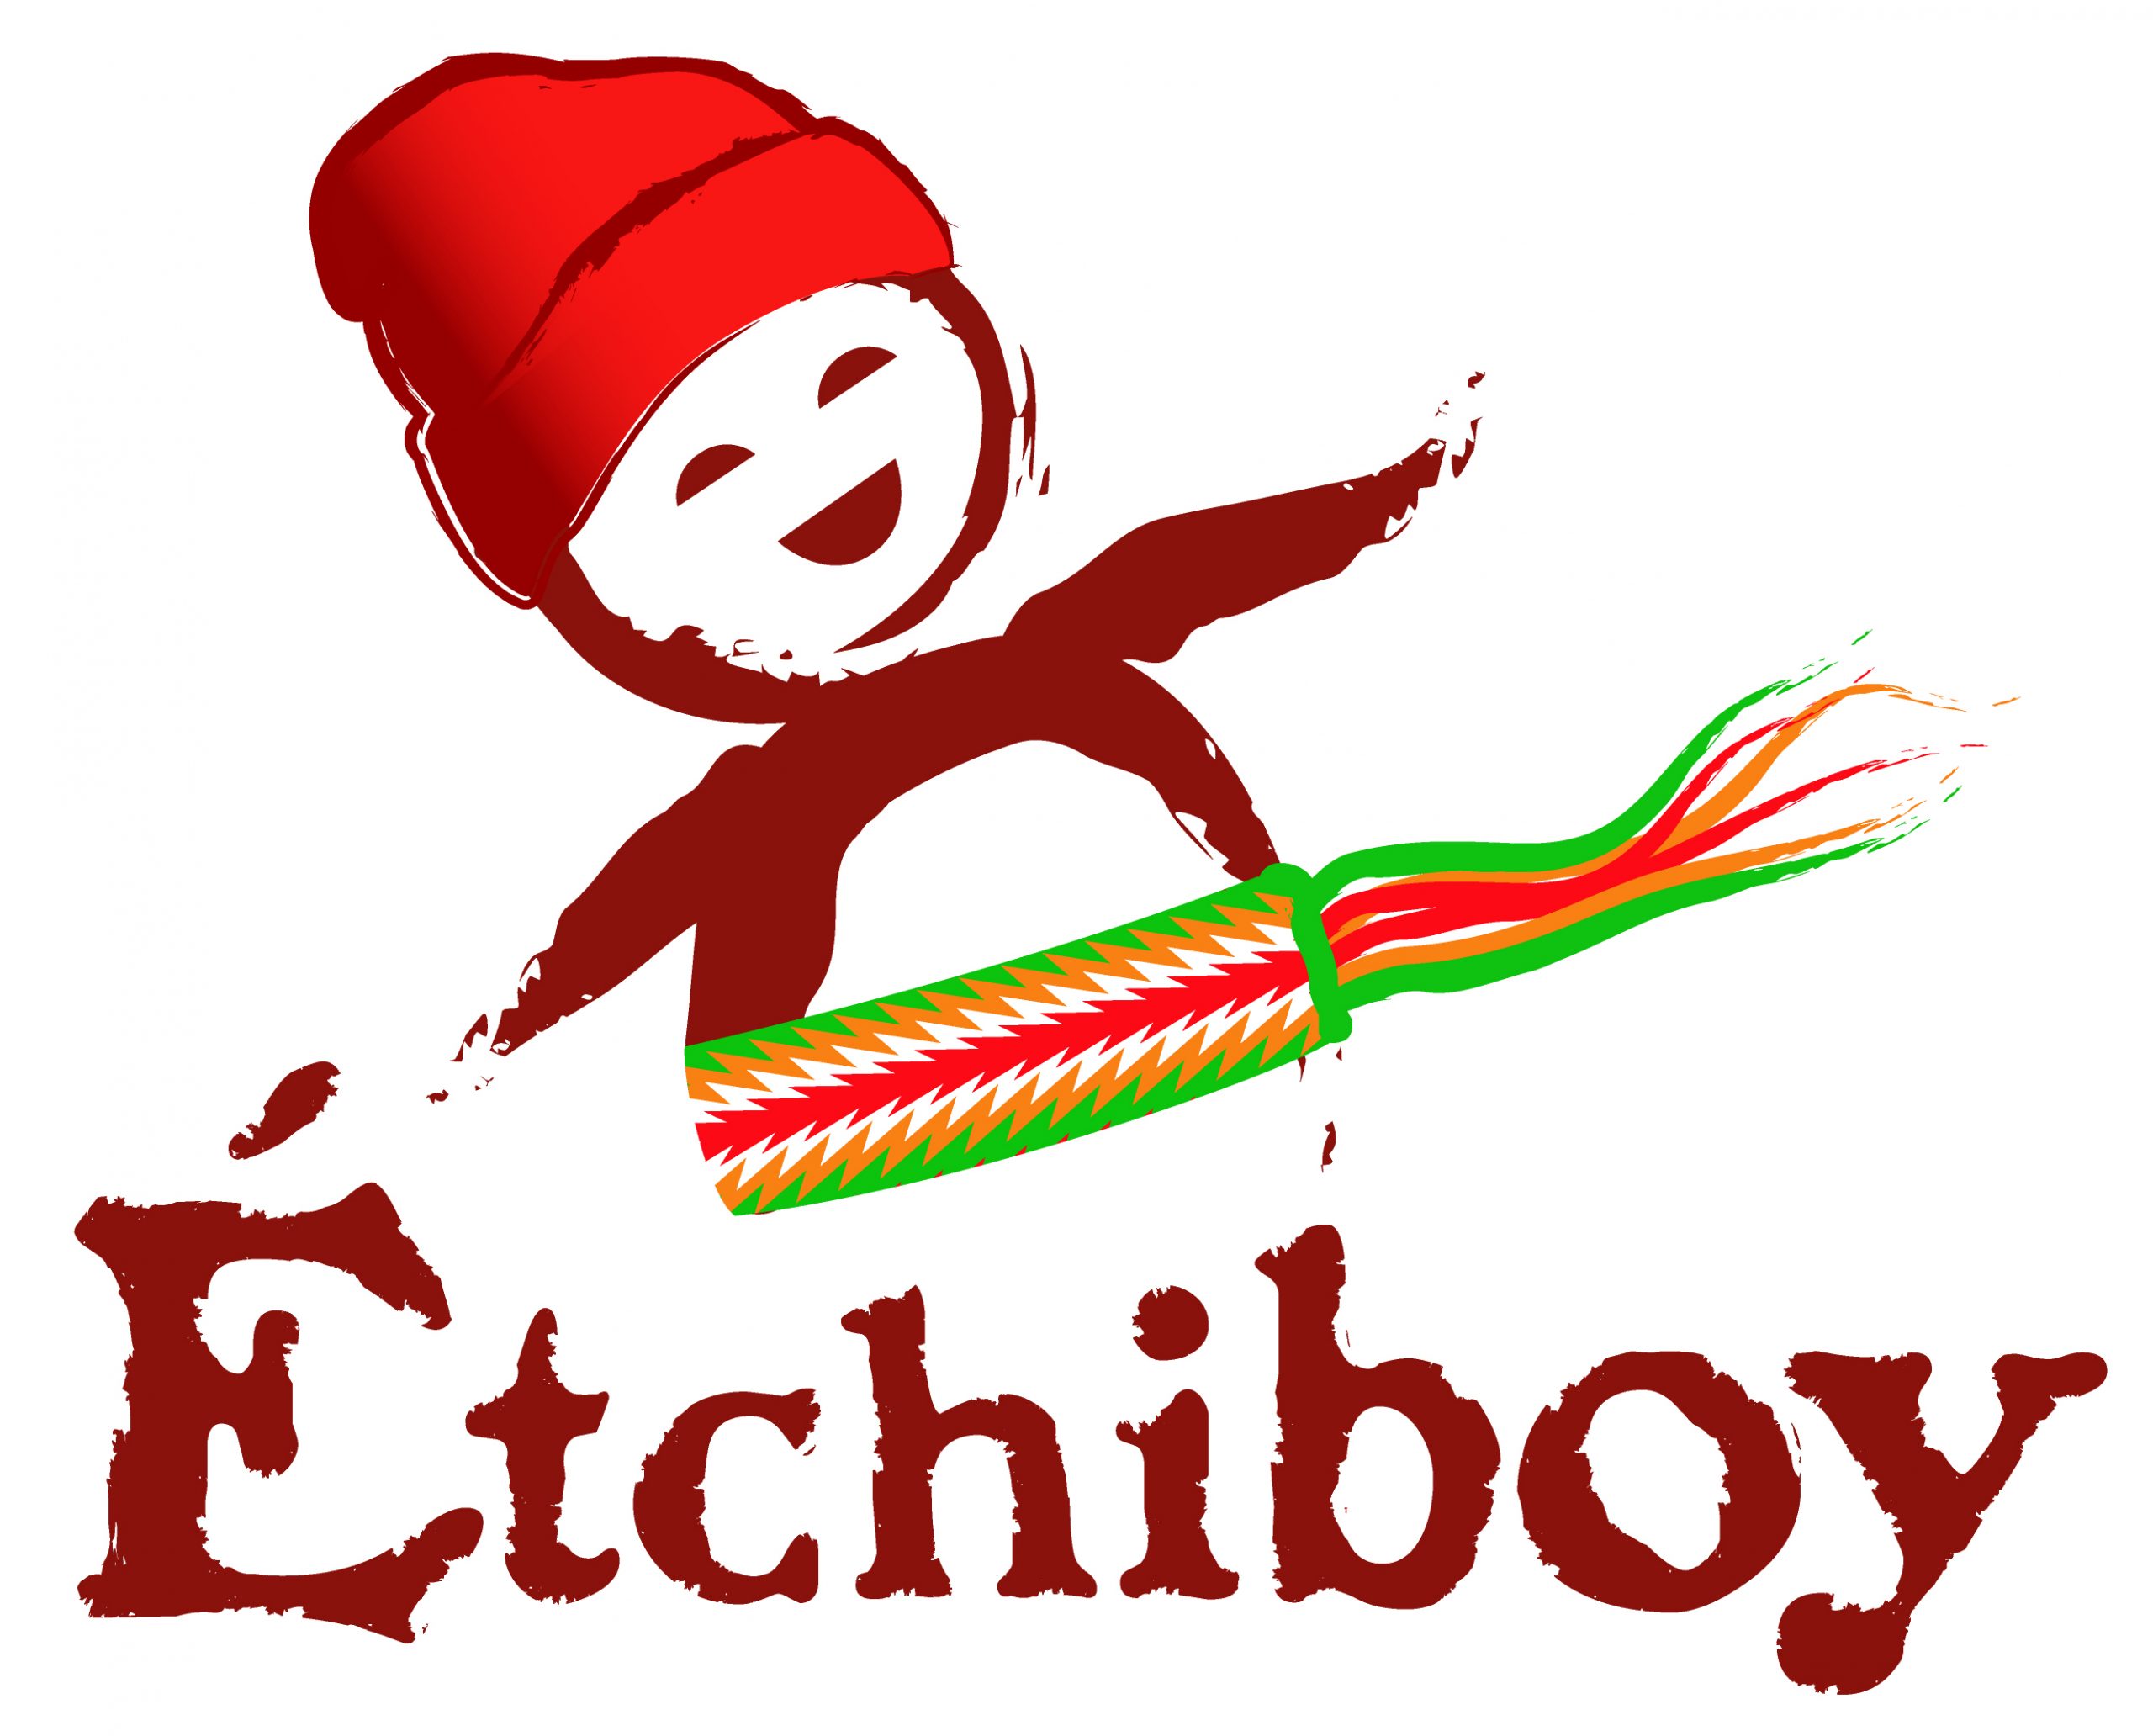 Petit-Étchiboy-logo-scaled.jpg